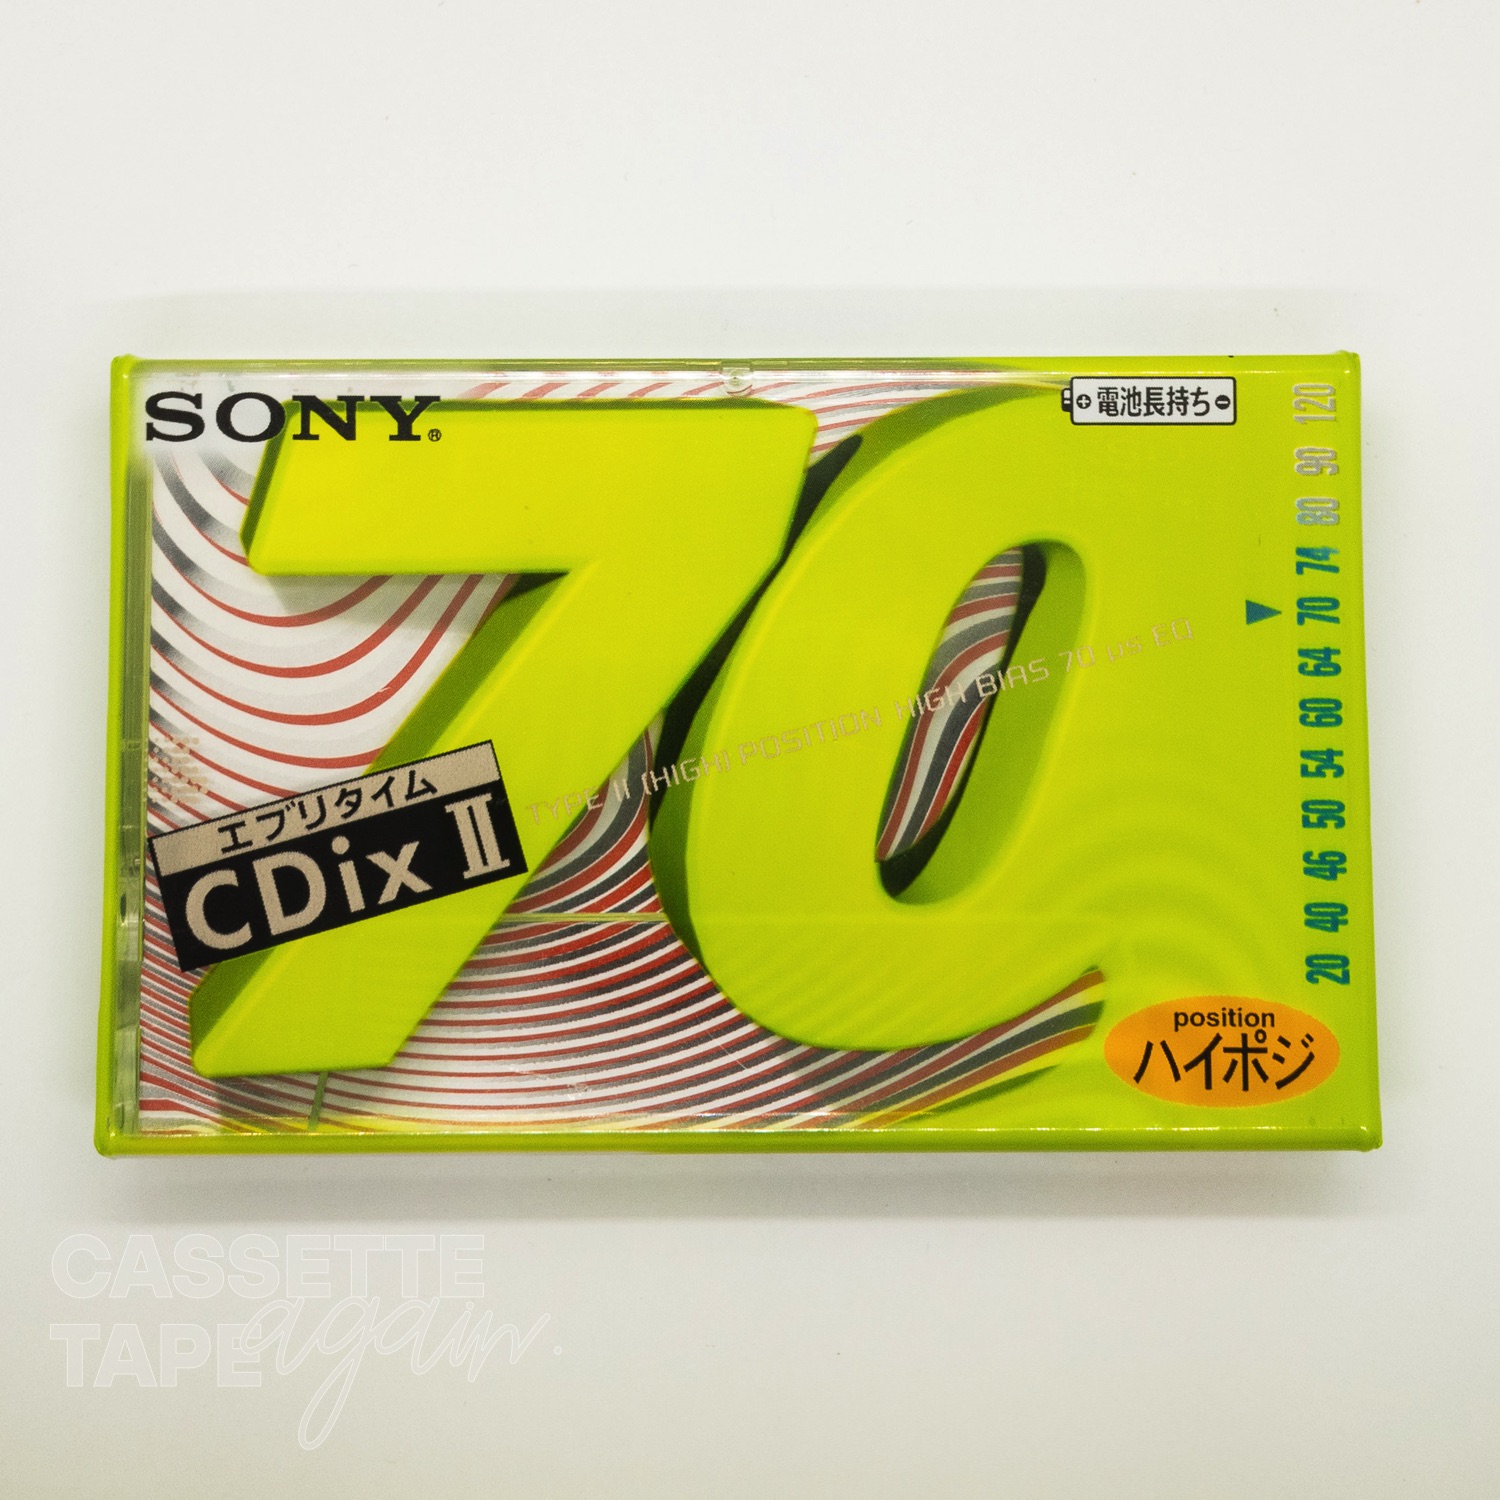 CDixII 70 / SONY(ハイポジ)